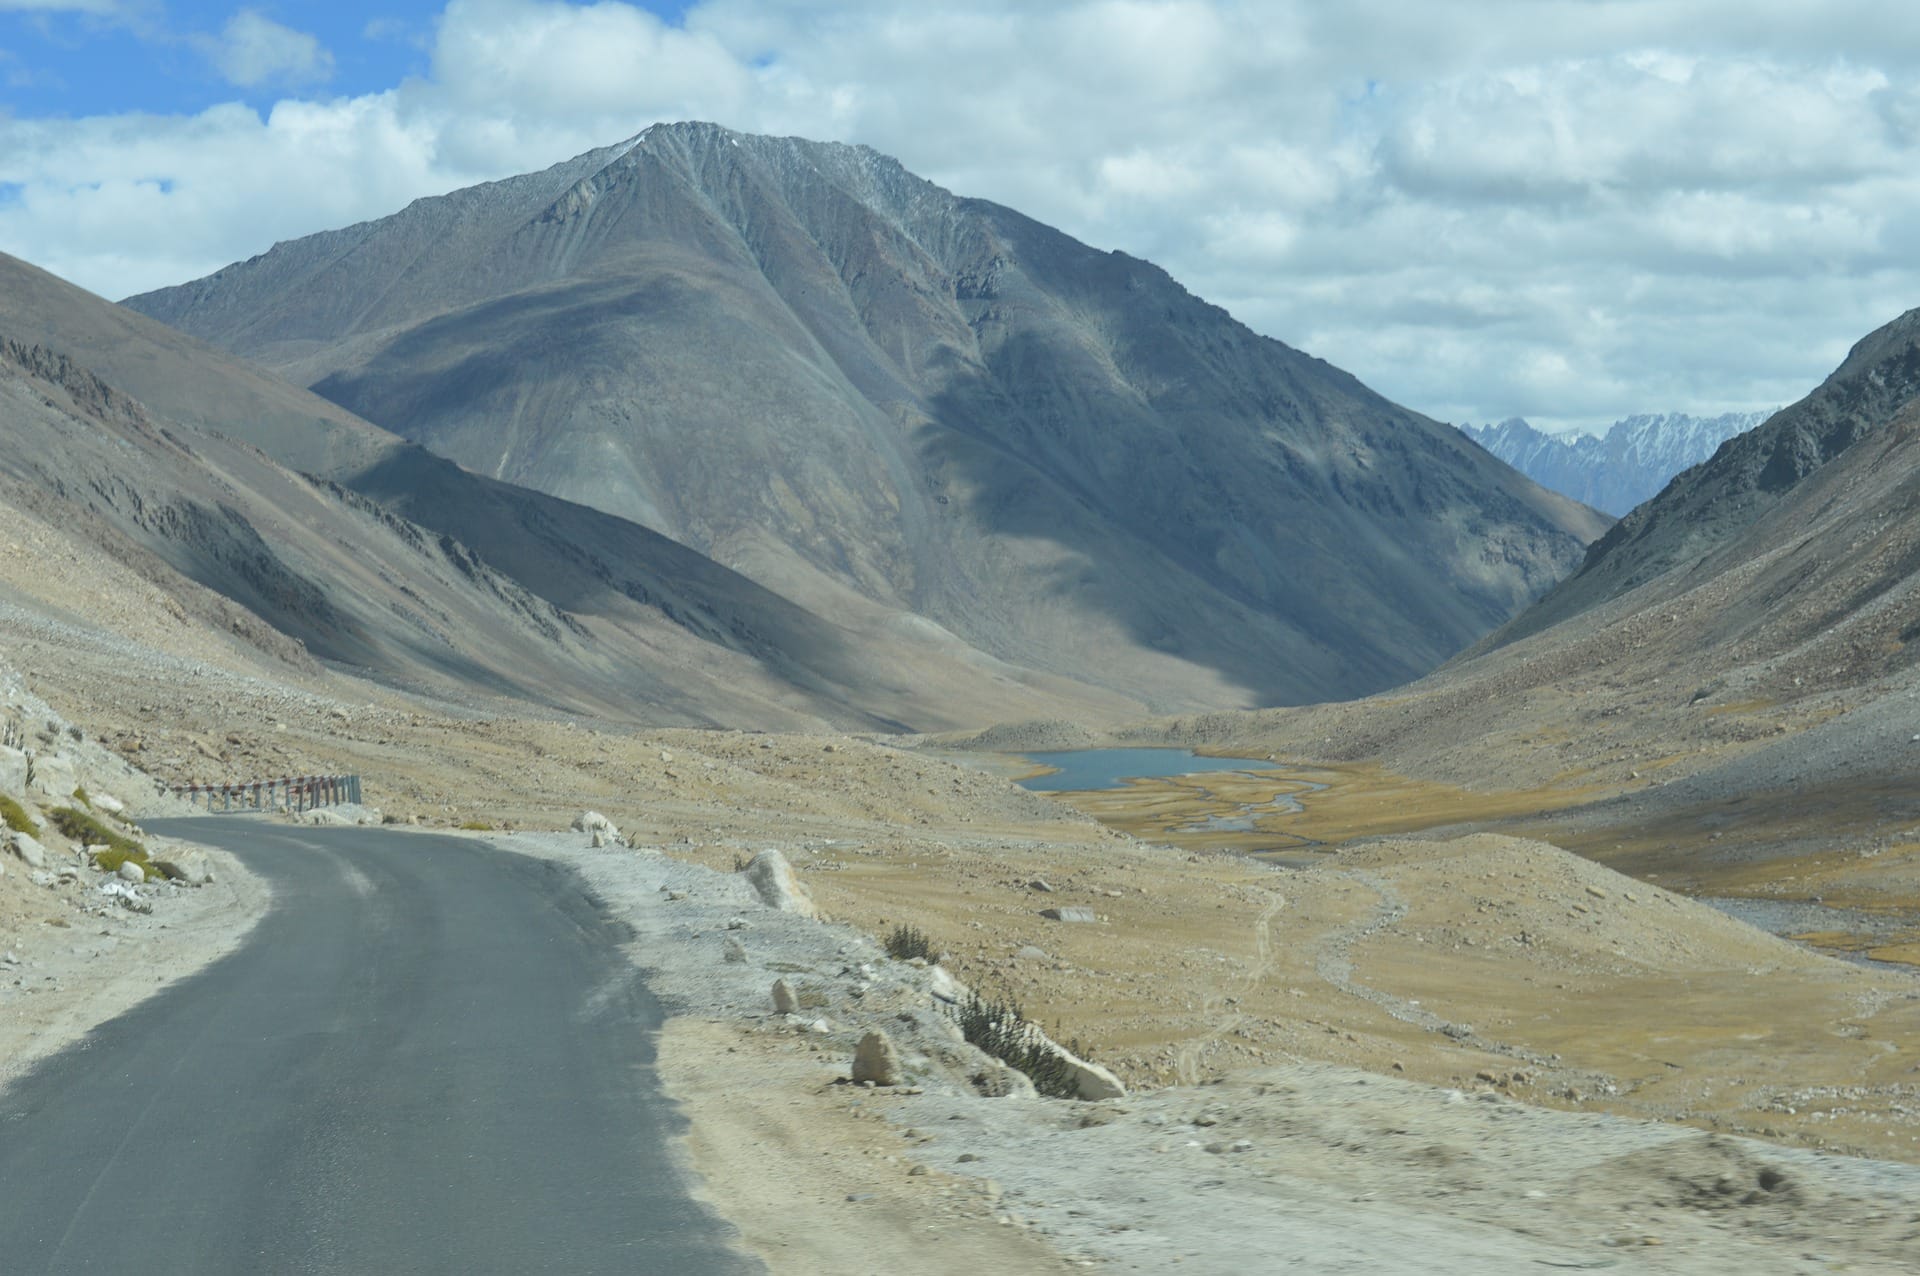 Metal Road leading to Ladakh
